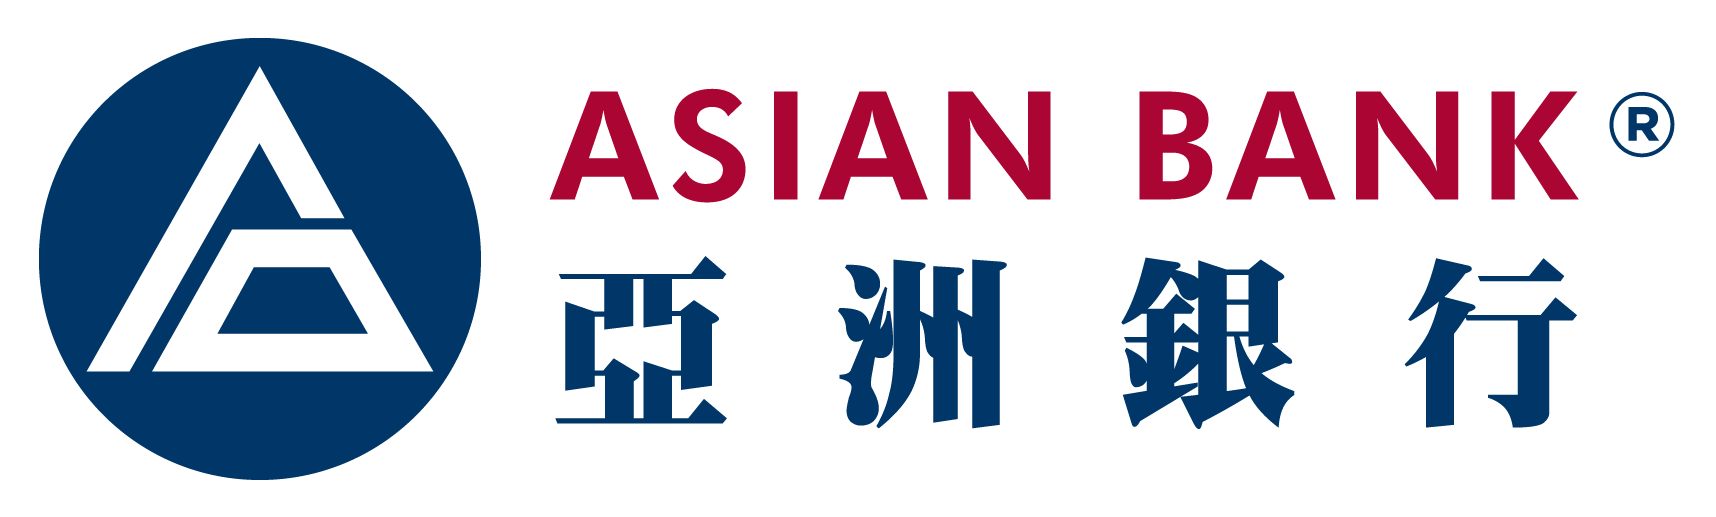 AsianBank_FinalLogo_Horizontal_Trademark-01